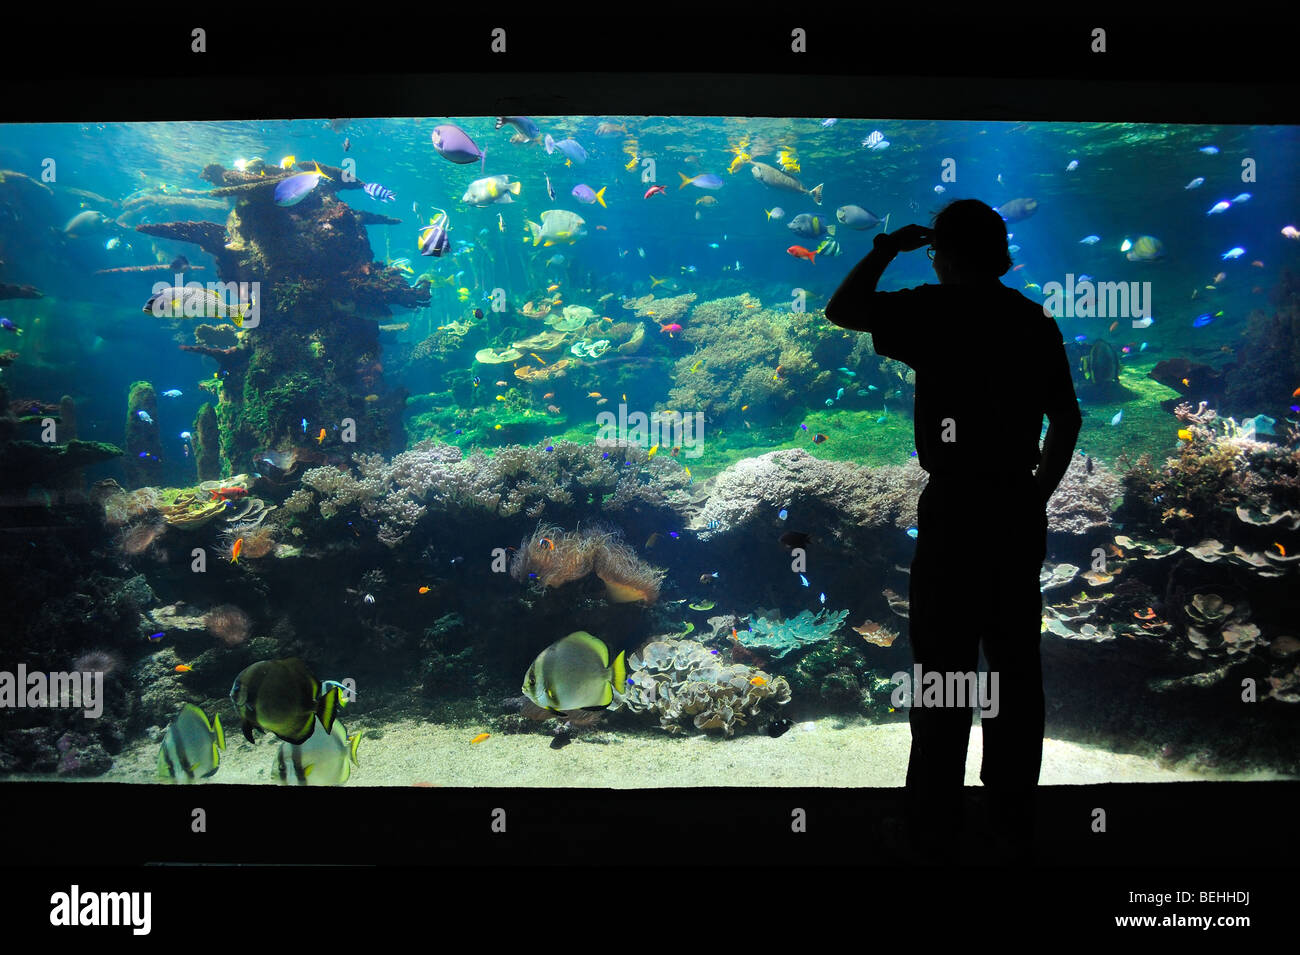 Tourists looking at the Nausicaä sea aquarium with tropical fishes, Boulogne-sur-Mer, Pas-de-Calais, France Stock Photo